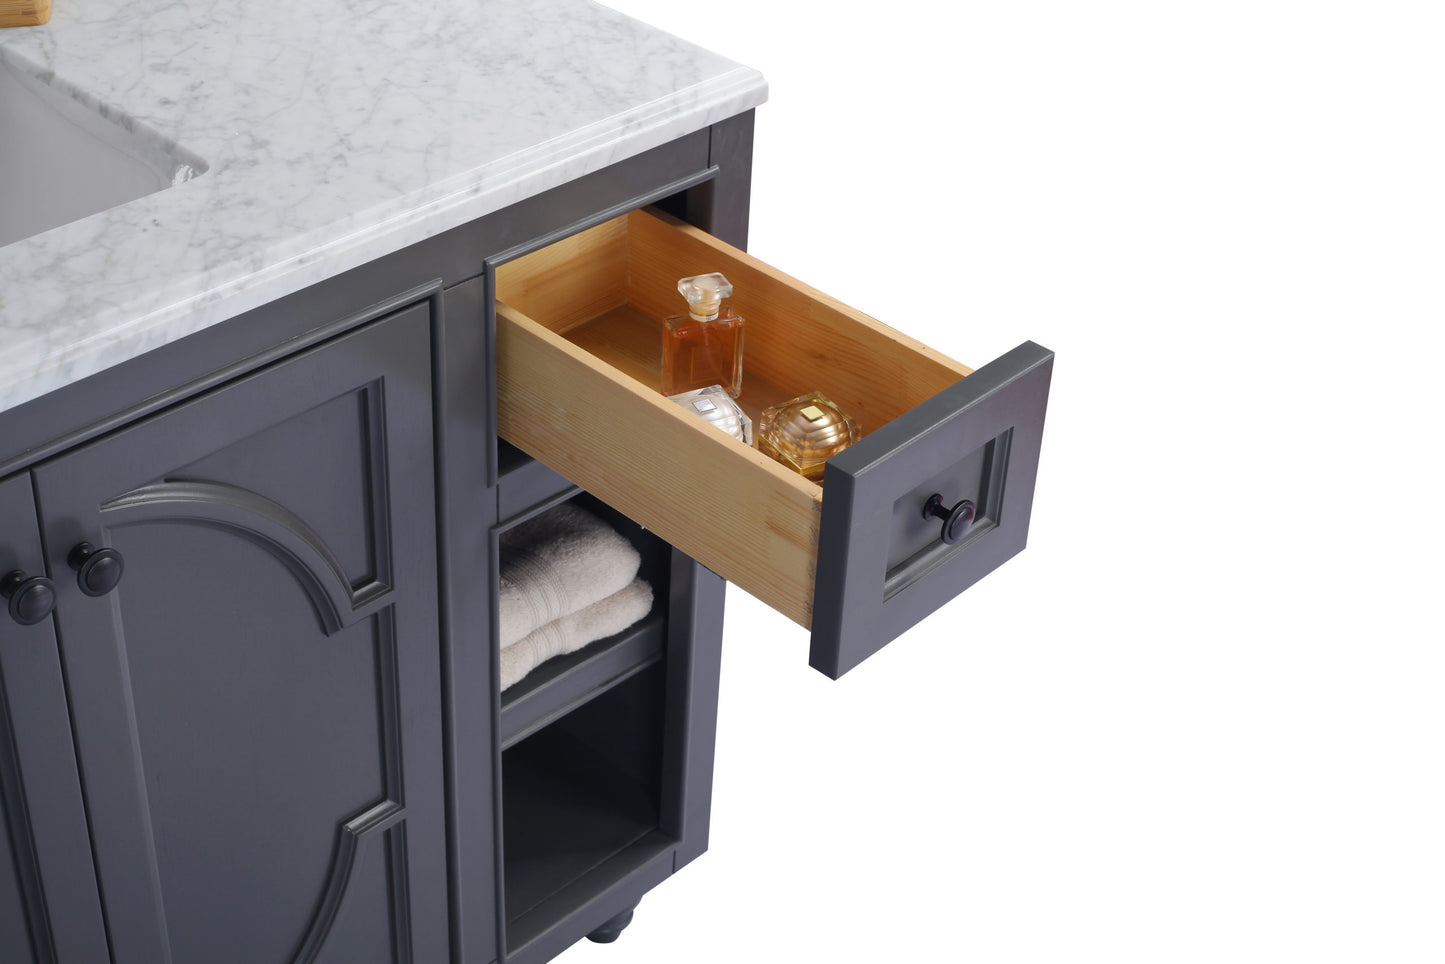 Odyssey 48" Maple Grey Bathroom Vanity with Black Wood Marble Countertop